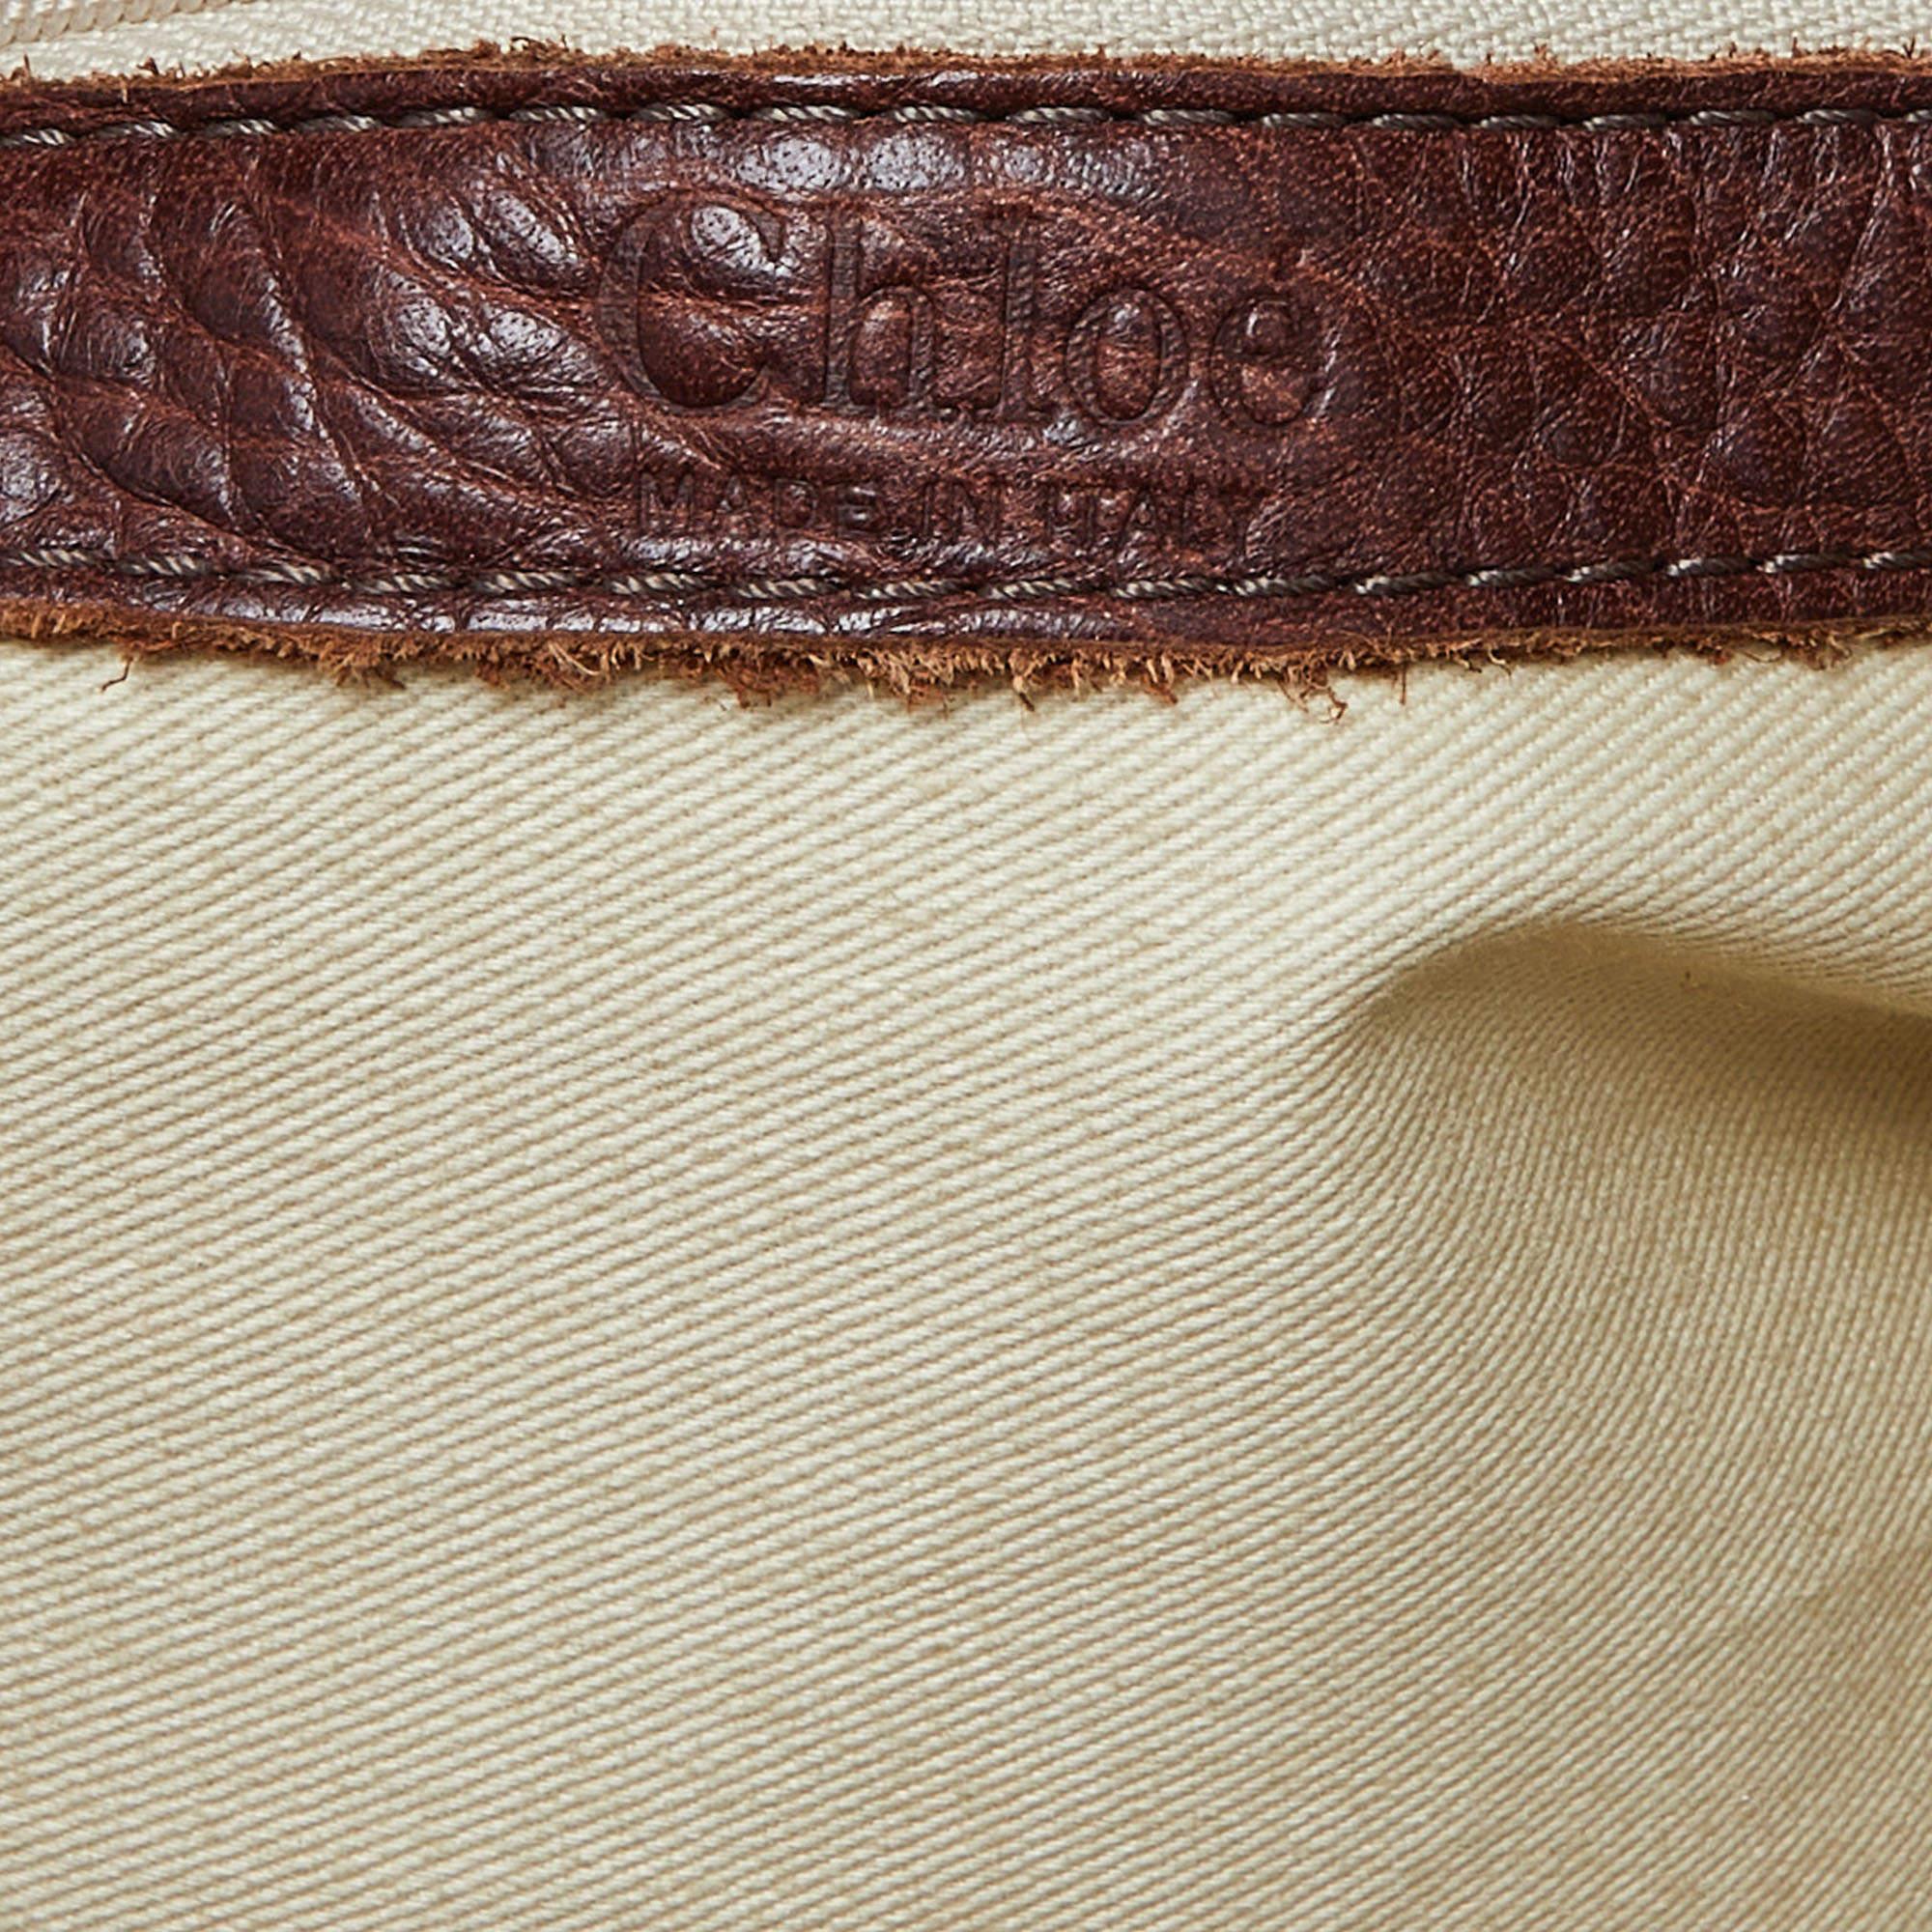 Chloe Burgundy Leather Paddington Bag 6